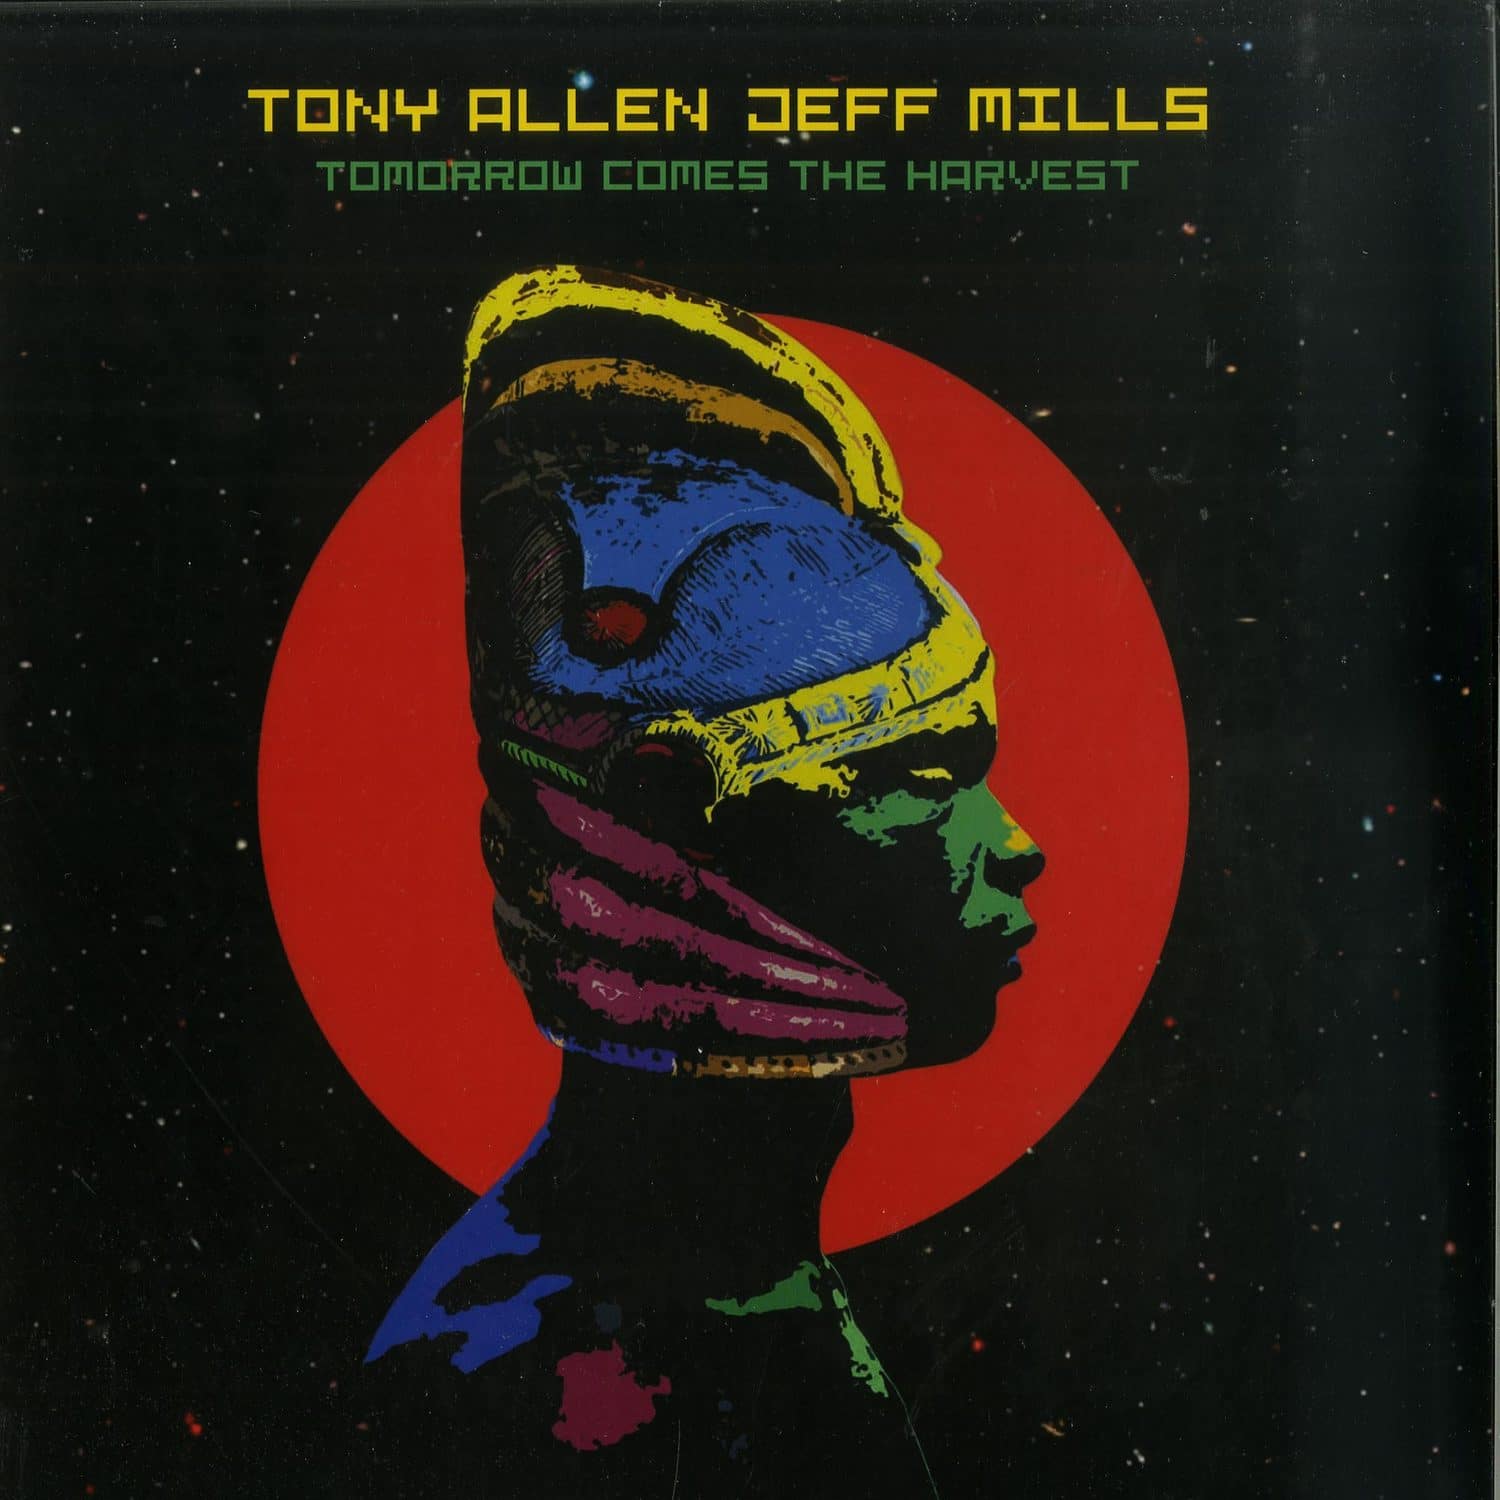 Tony Allen & Jeff Mills - TOMORROW COMES THE HARVEST 